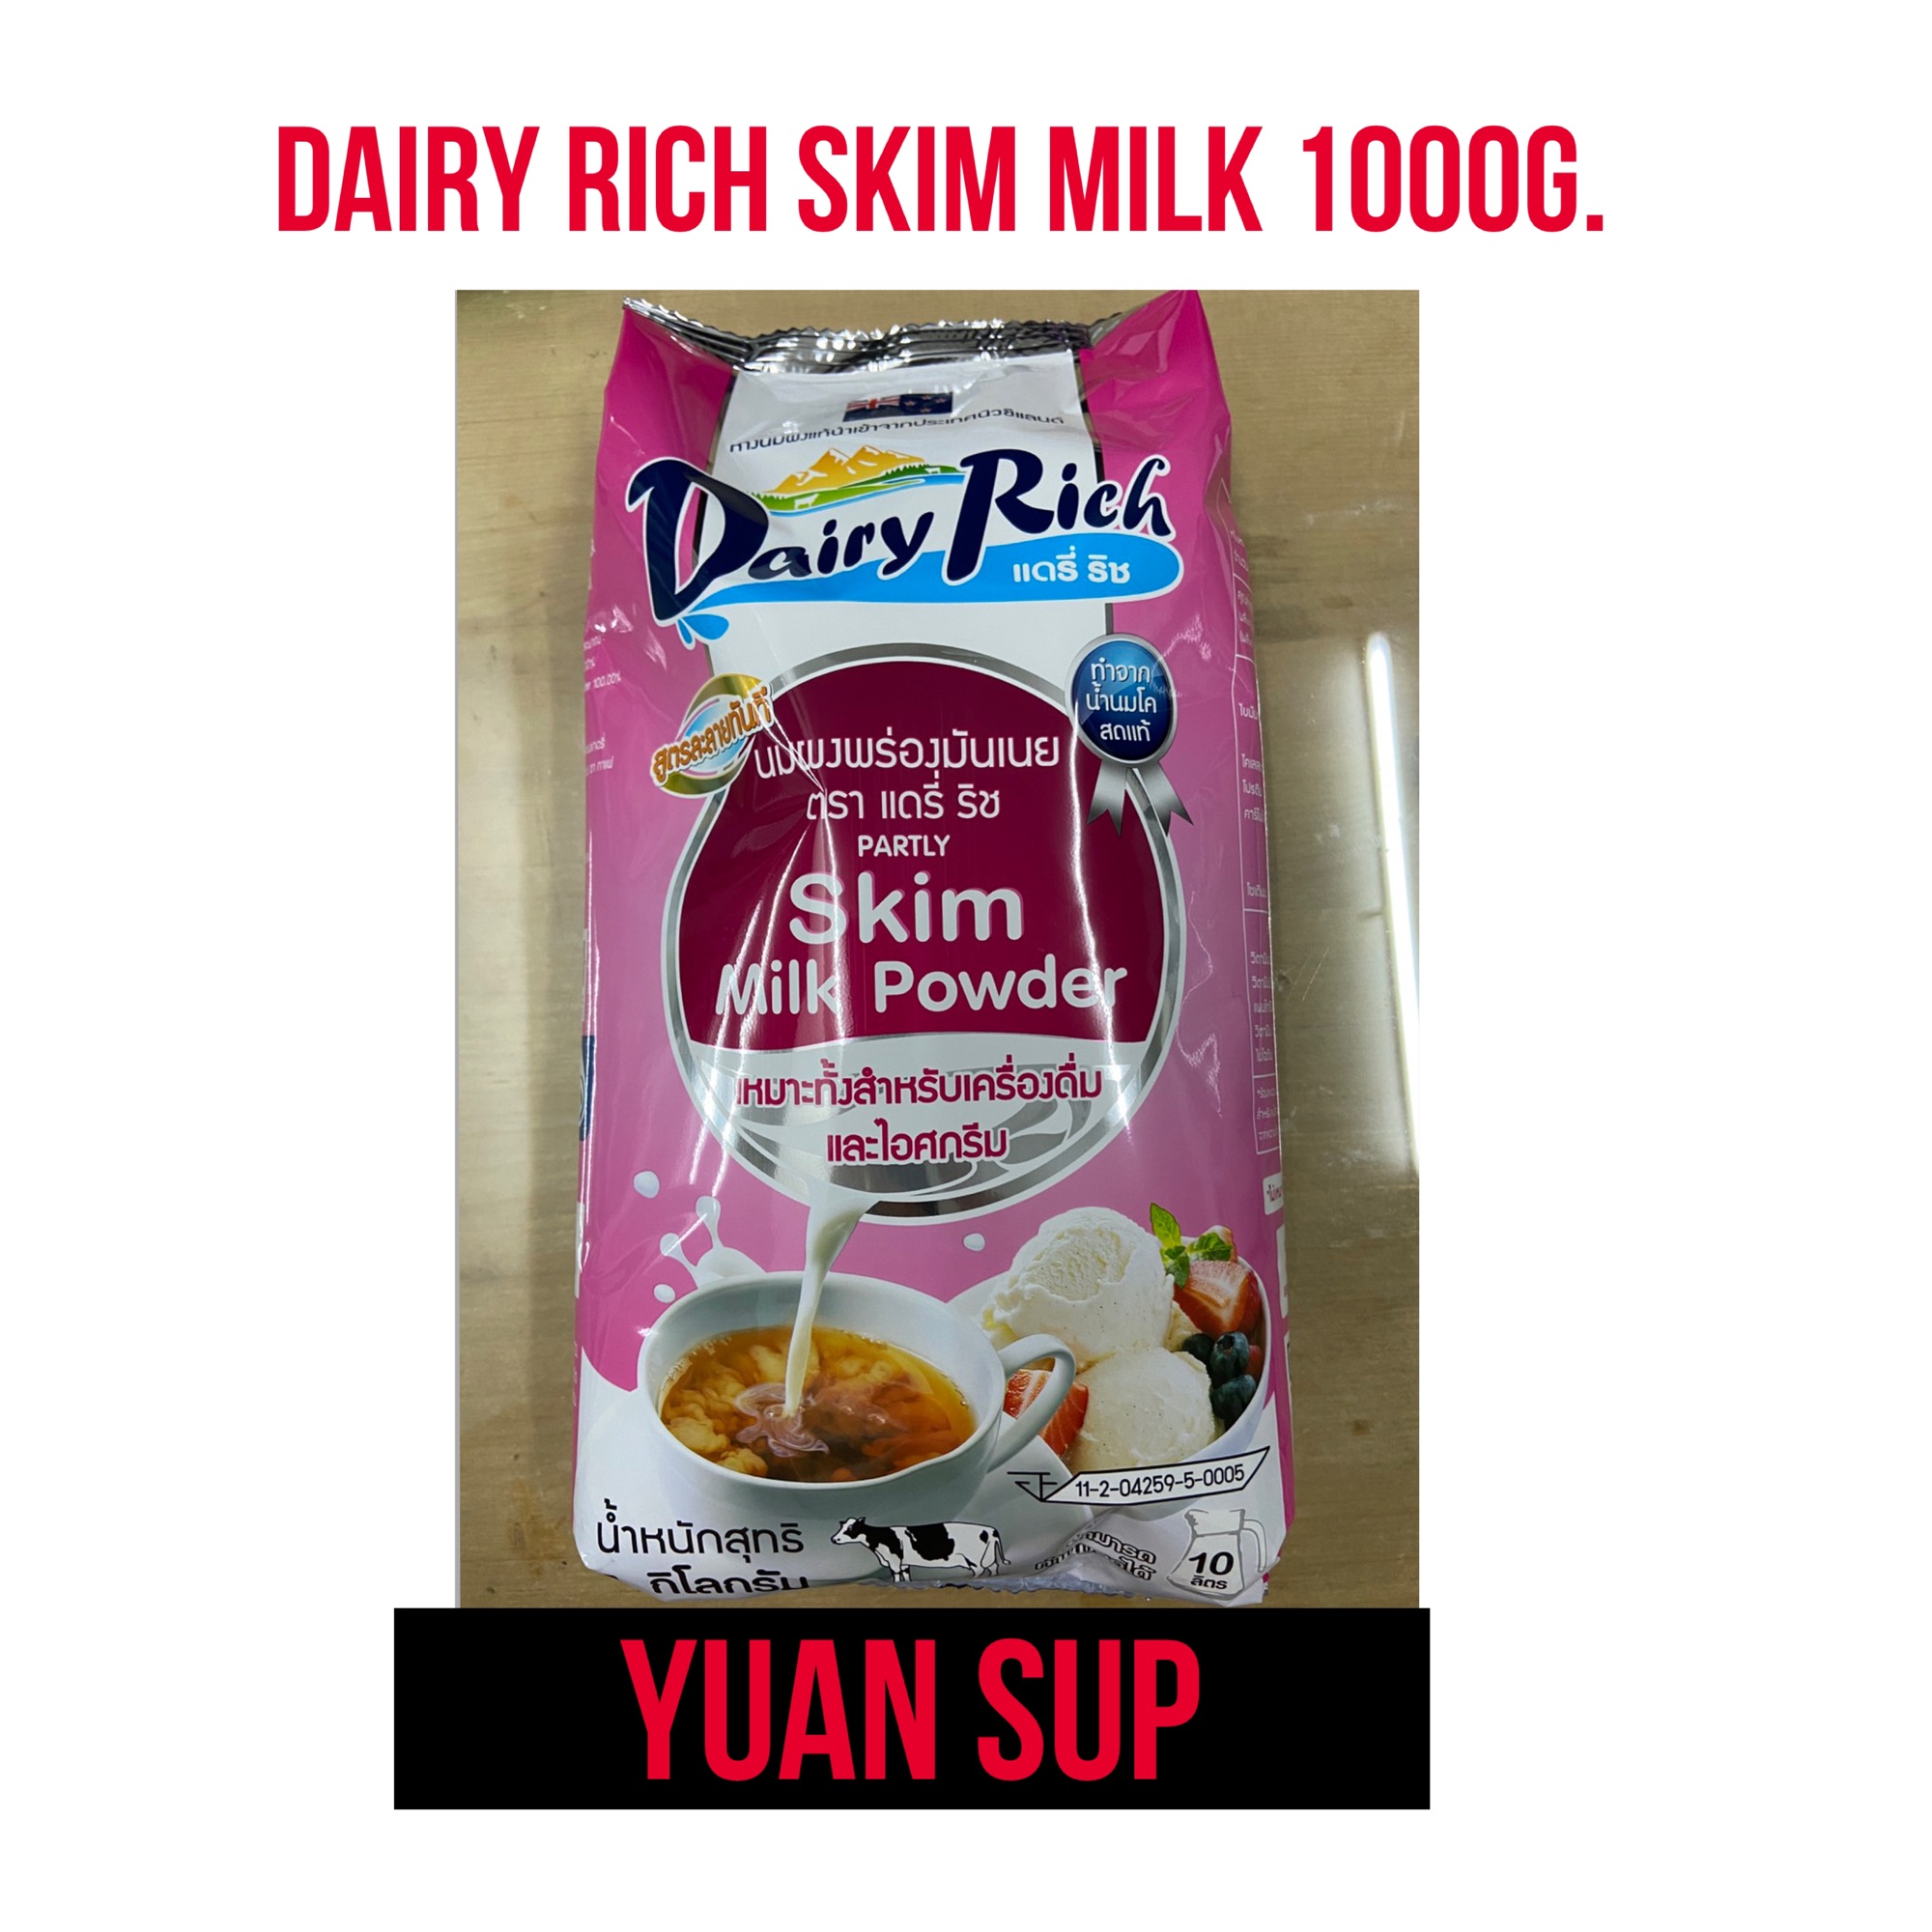 Dairy Rich skim milk (Low fat) หางนมผงแดรี่ริช ปริมาณ1000g.สำหรับชงดื่มและทำเบเกอรี่